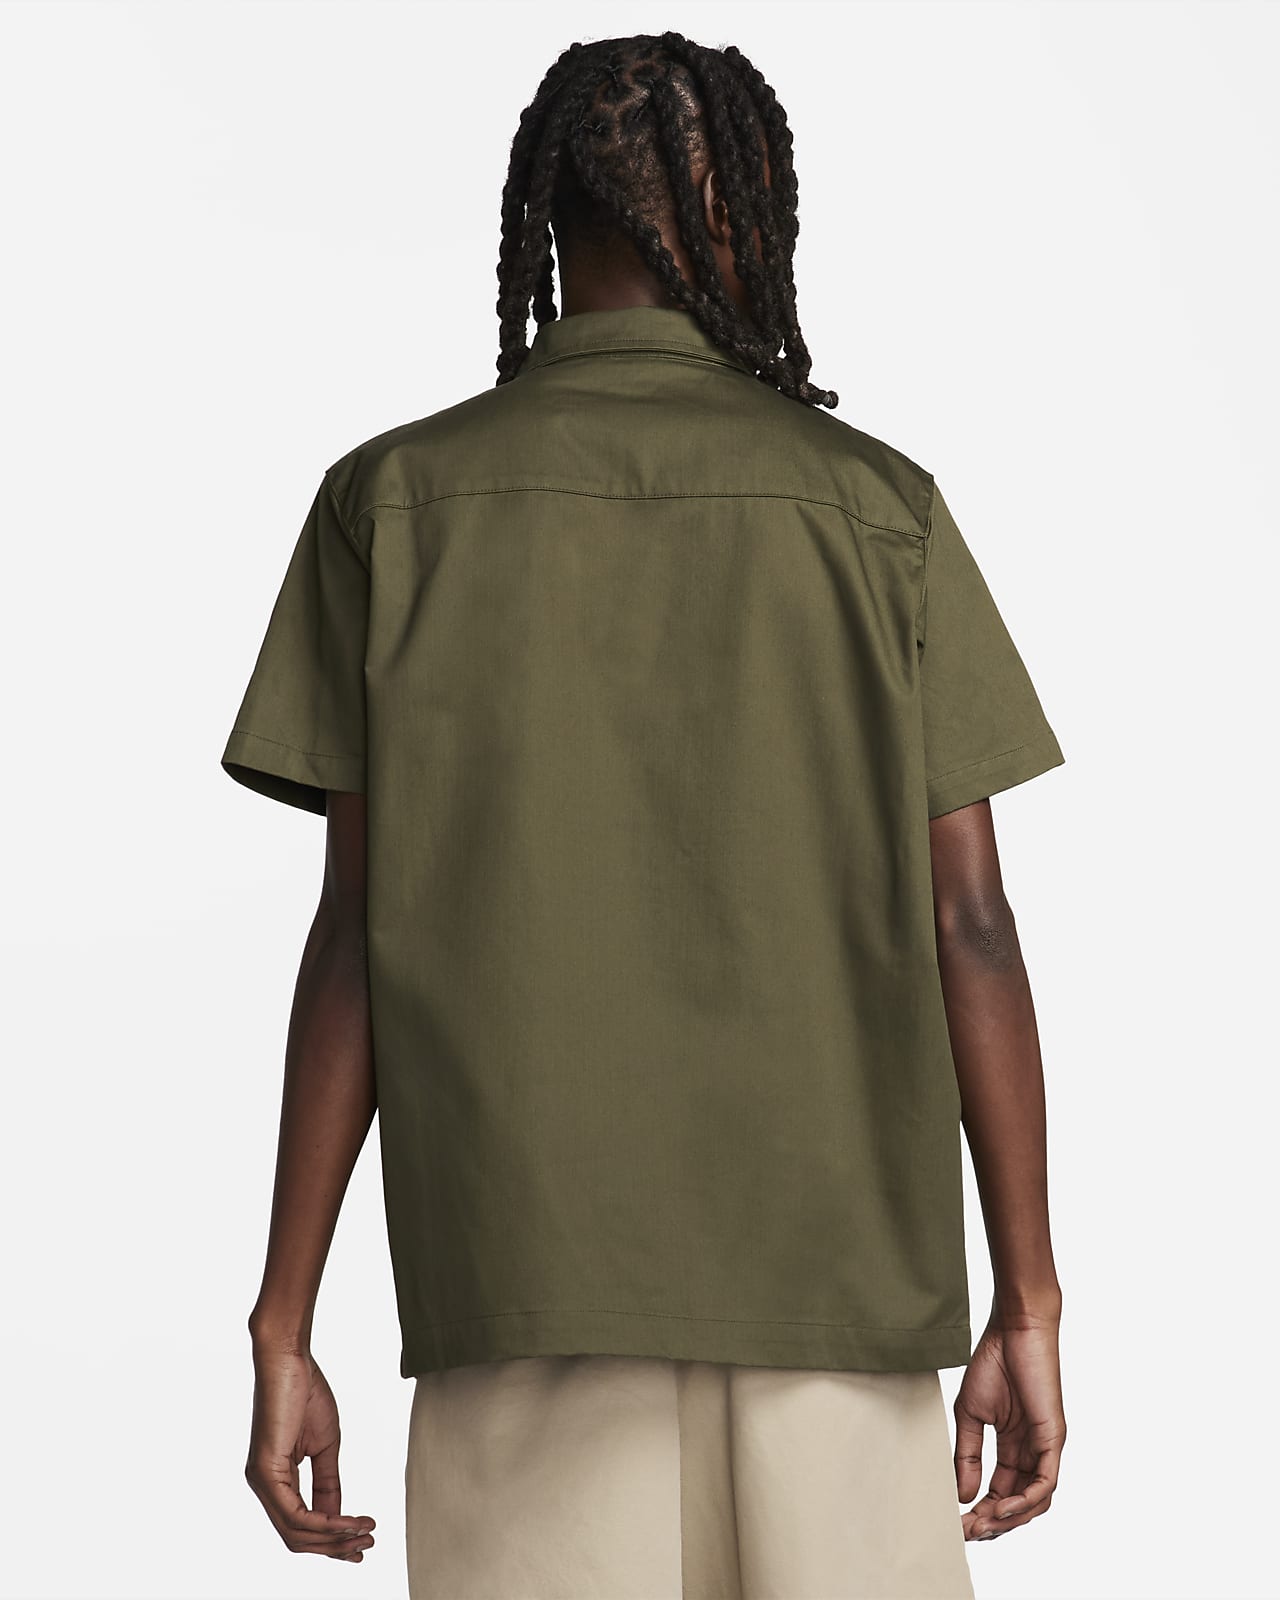 Mens functional short sleeve shirt Nike YOGA green